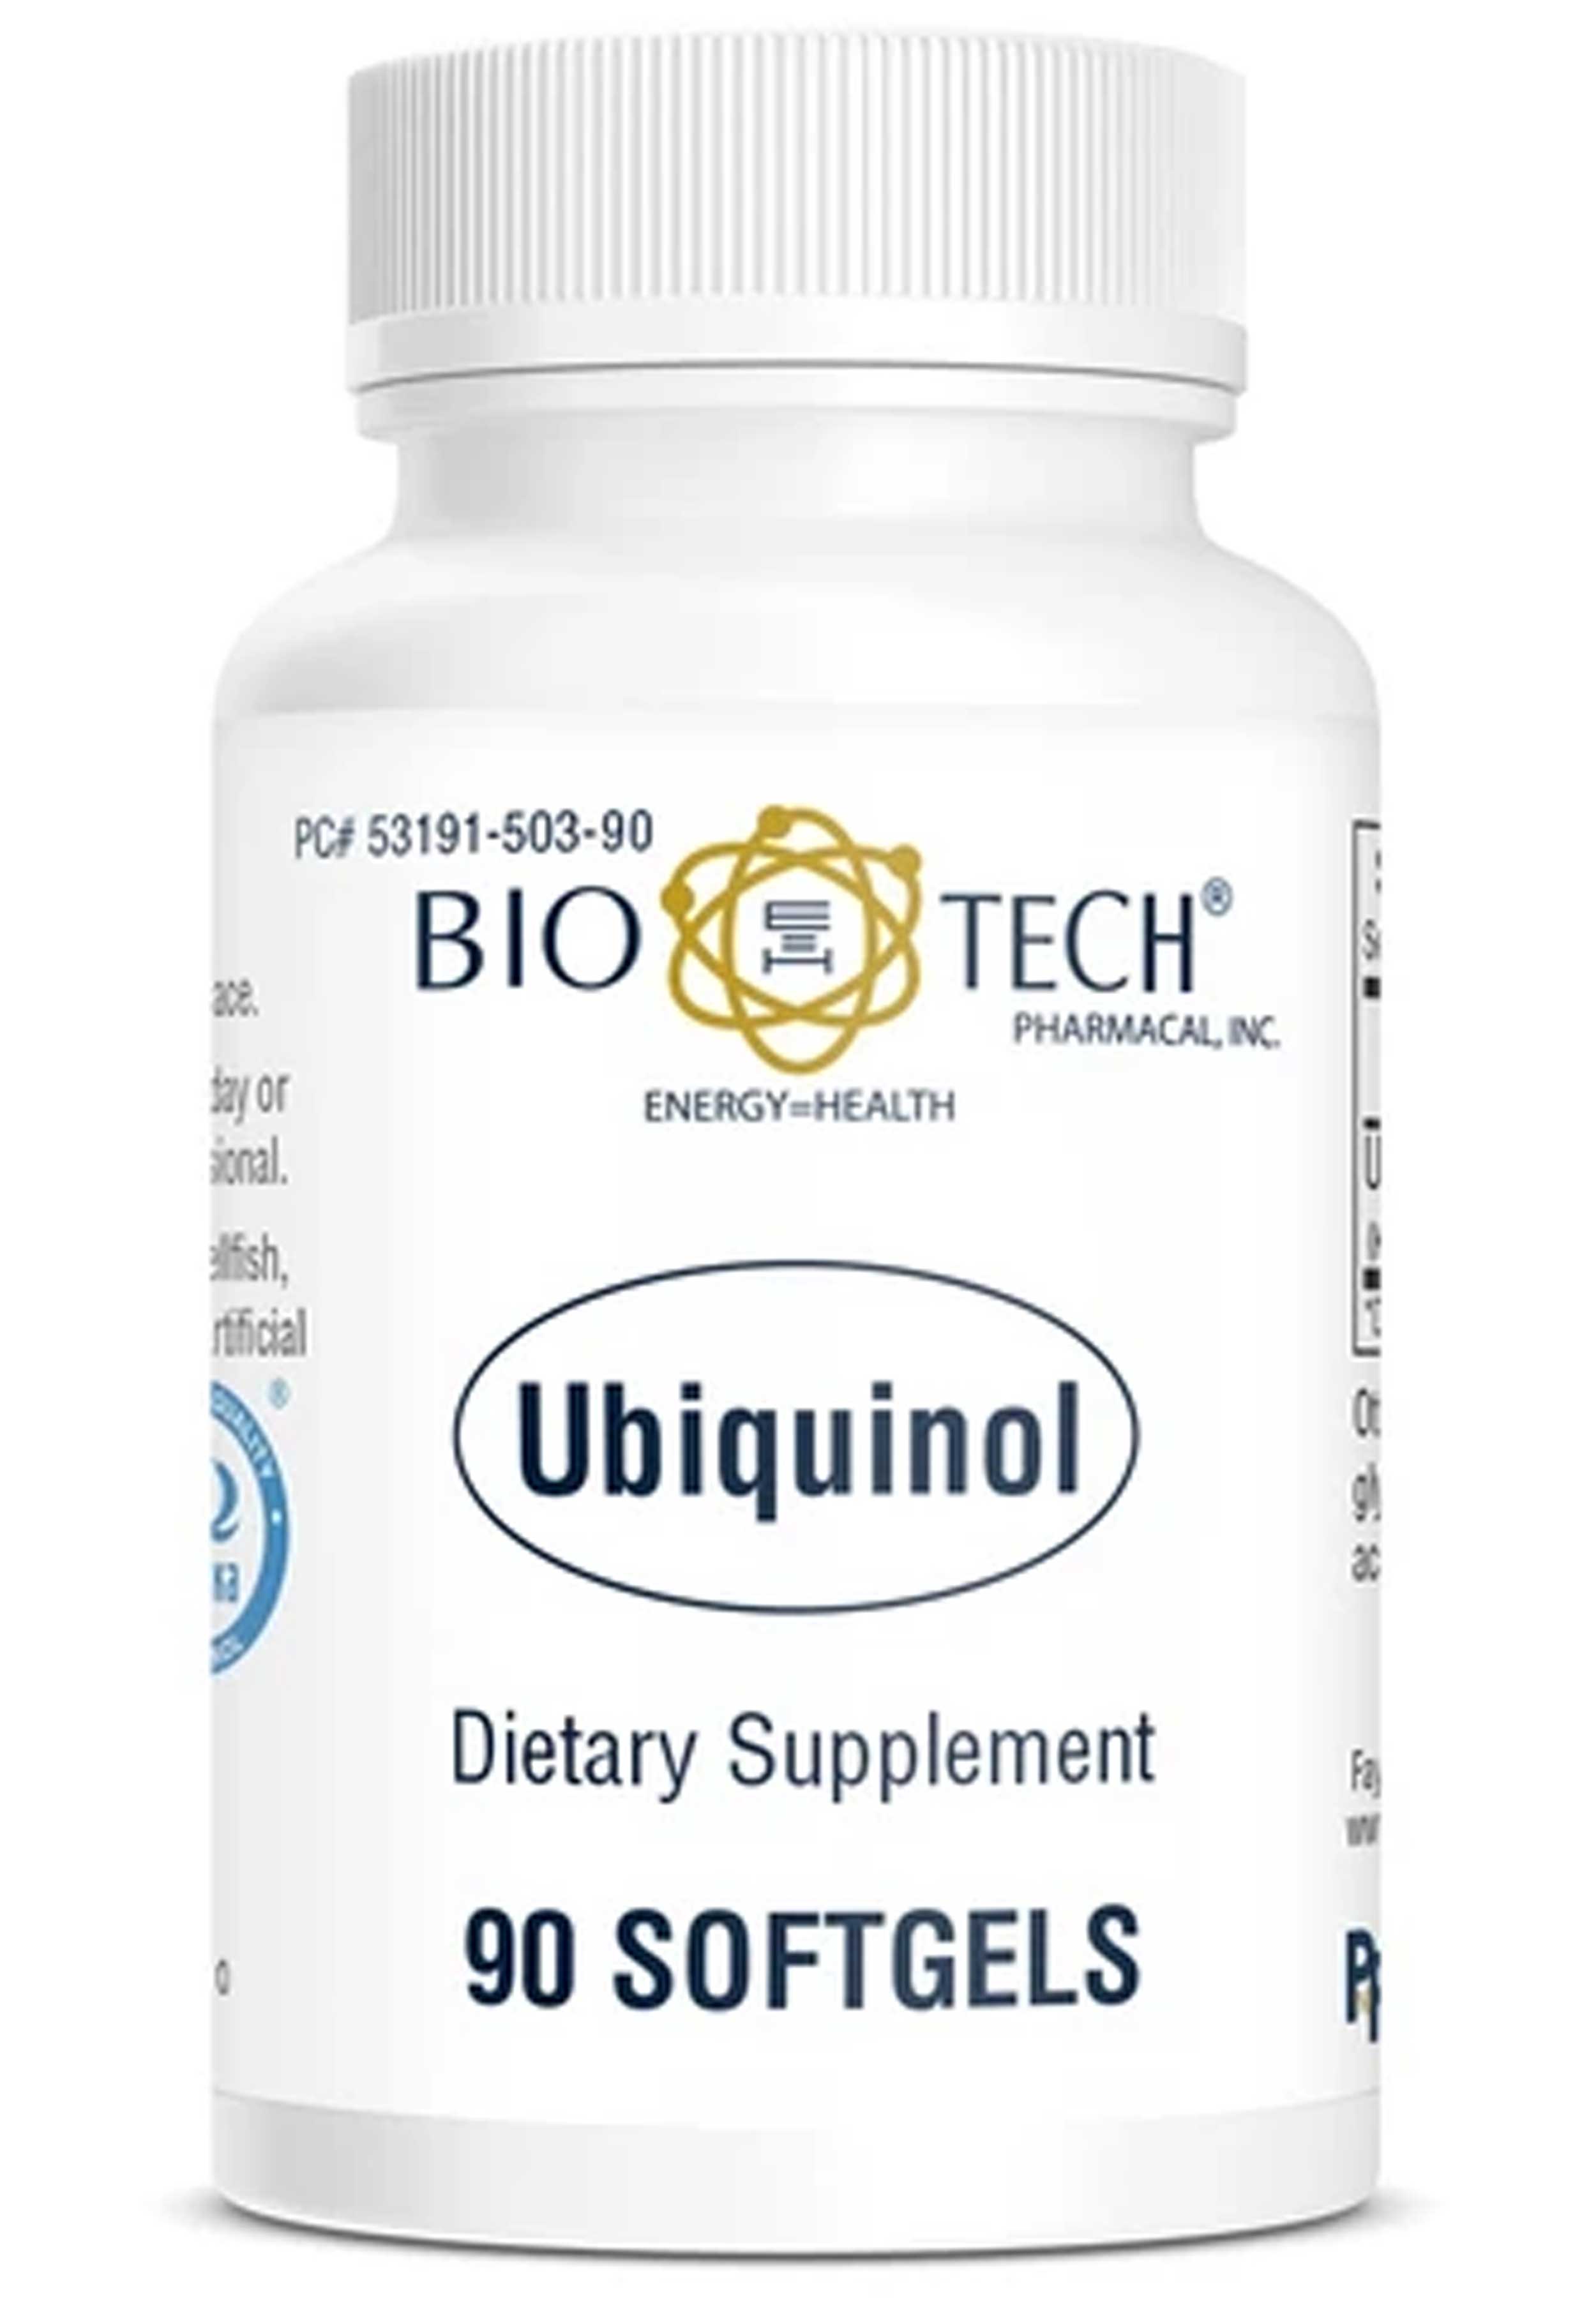 Bio-Tech Pharmacal Ubiquinol